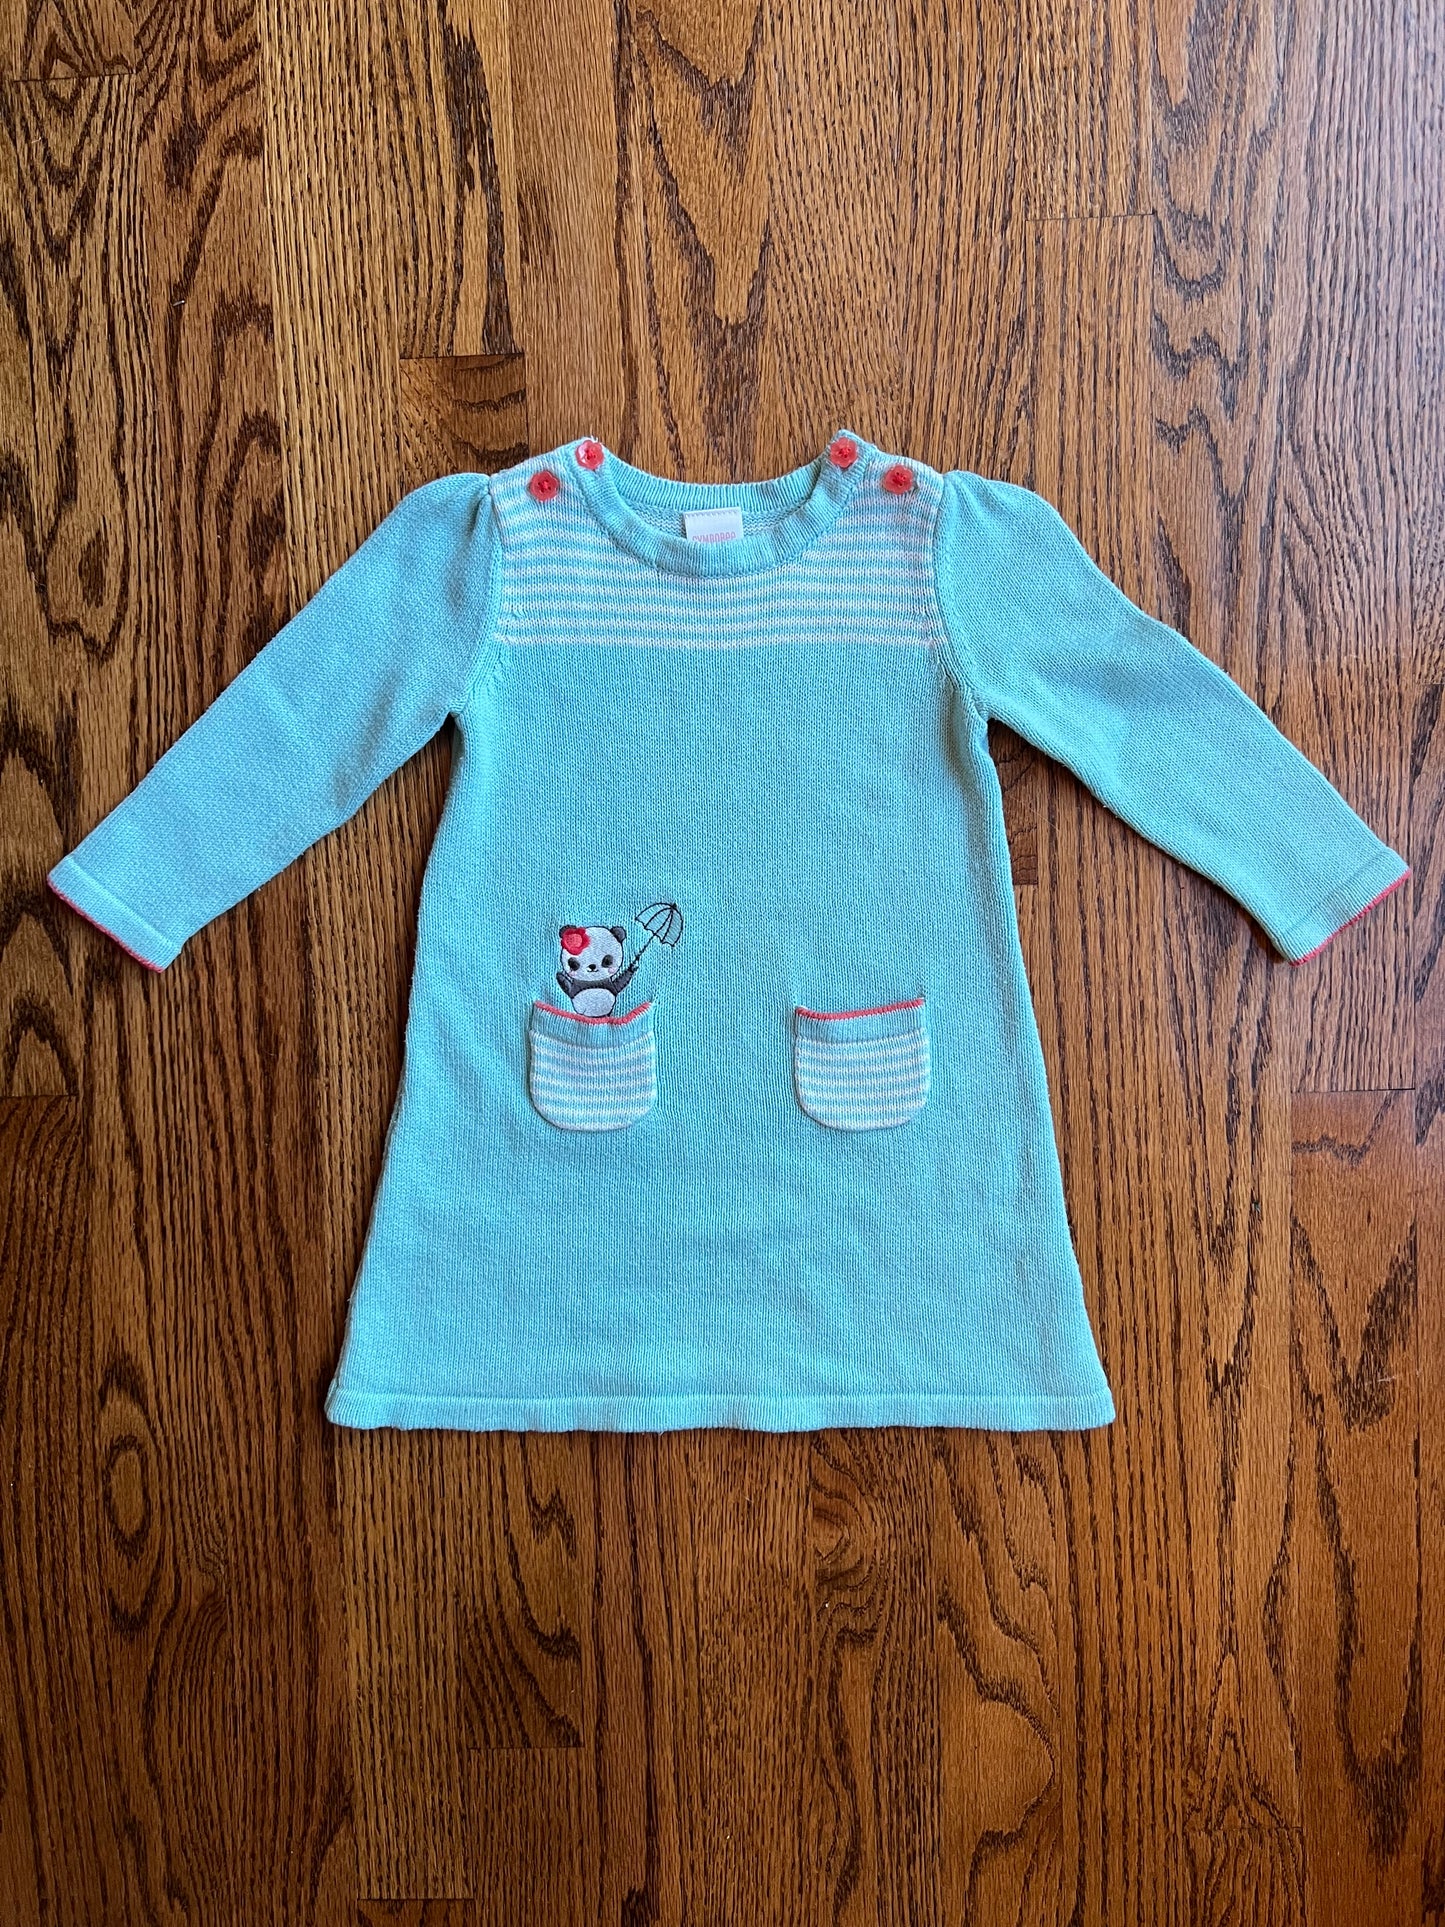 Gymboree Baby Girl 12-18M Teal Sweater Dress with Panda, VGUC